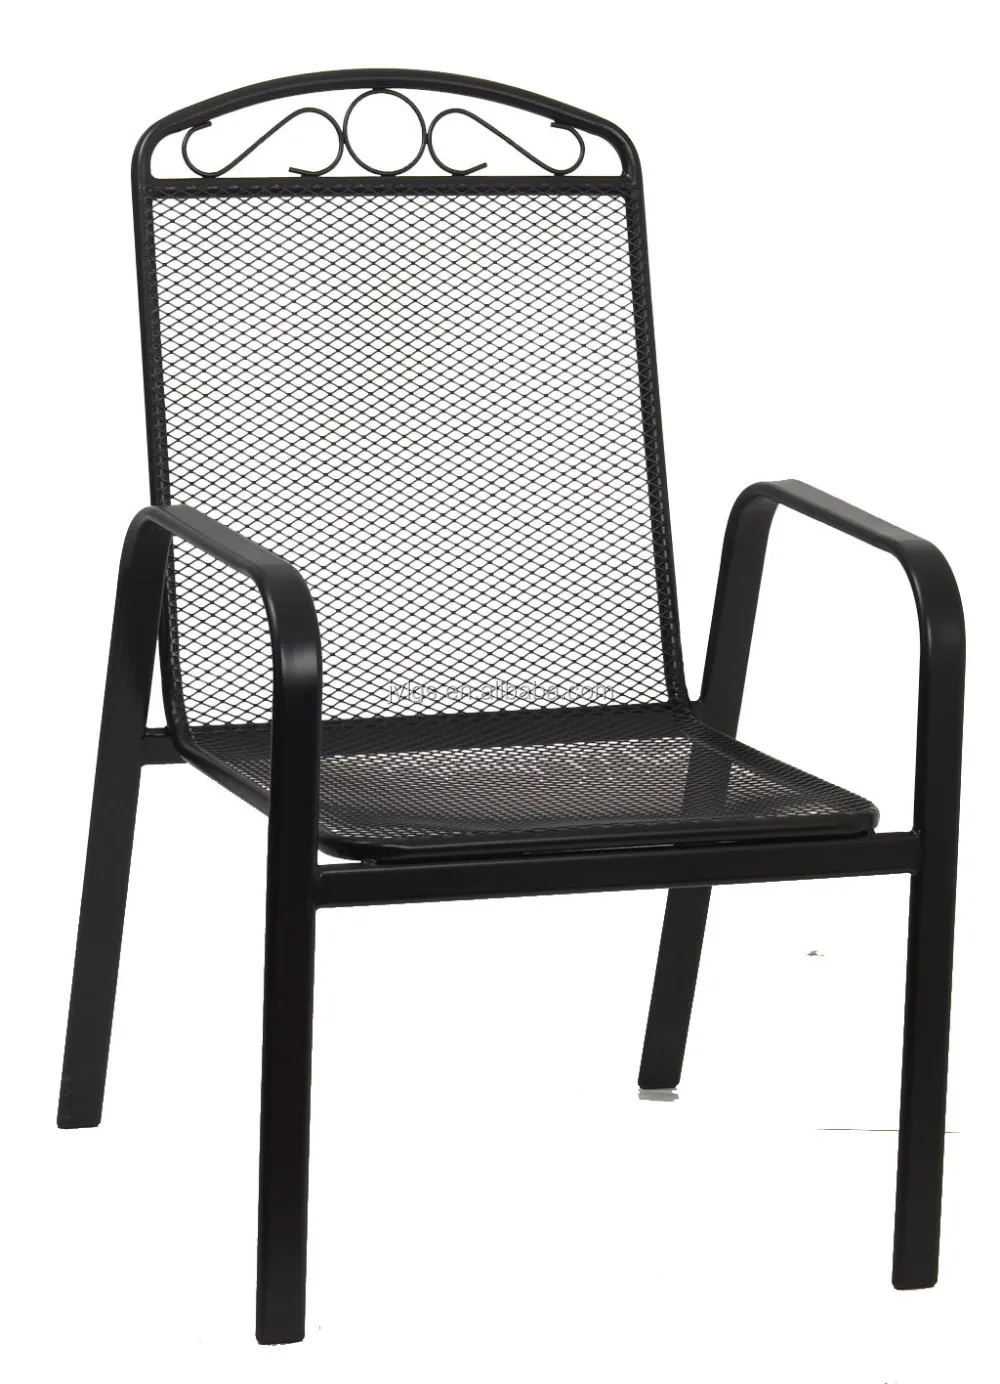 Outdoor Garden Wrought Iron Stacking Chair Aldi Metal Mesh ...